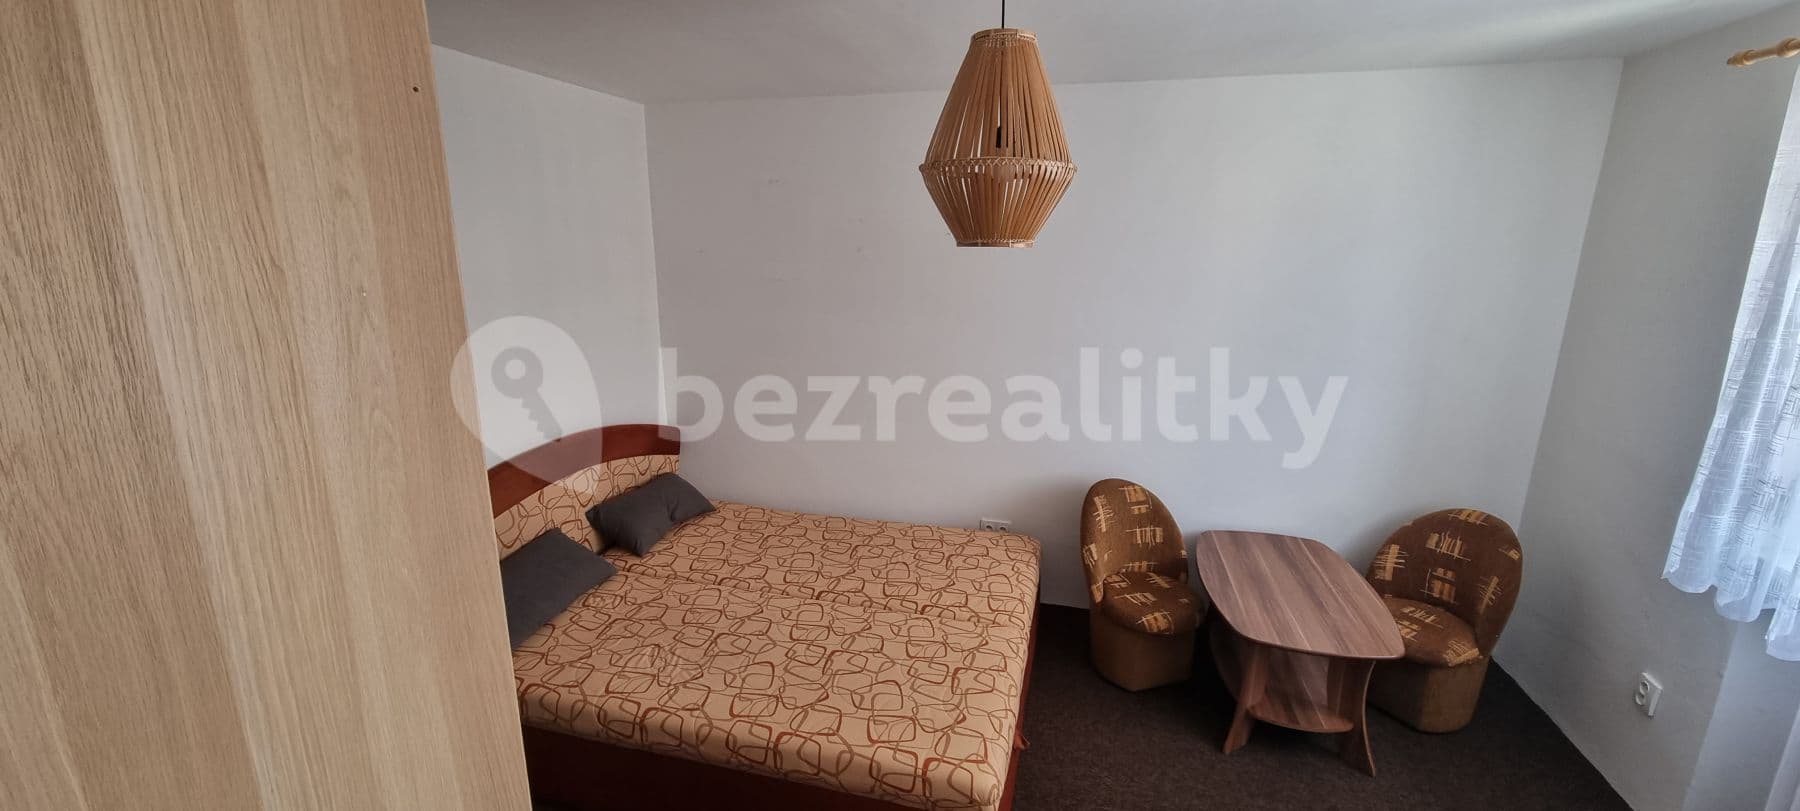 1 bedroom flat to rent, 28 m², Chelčického, Blansko, Jihomoravský Region